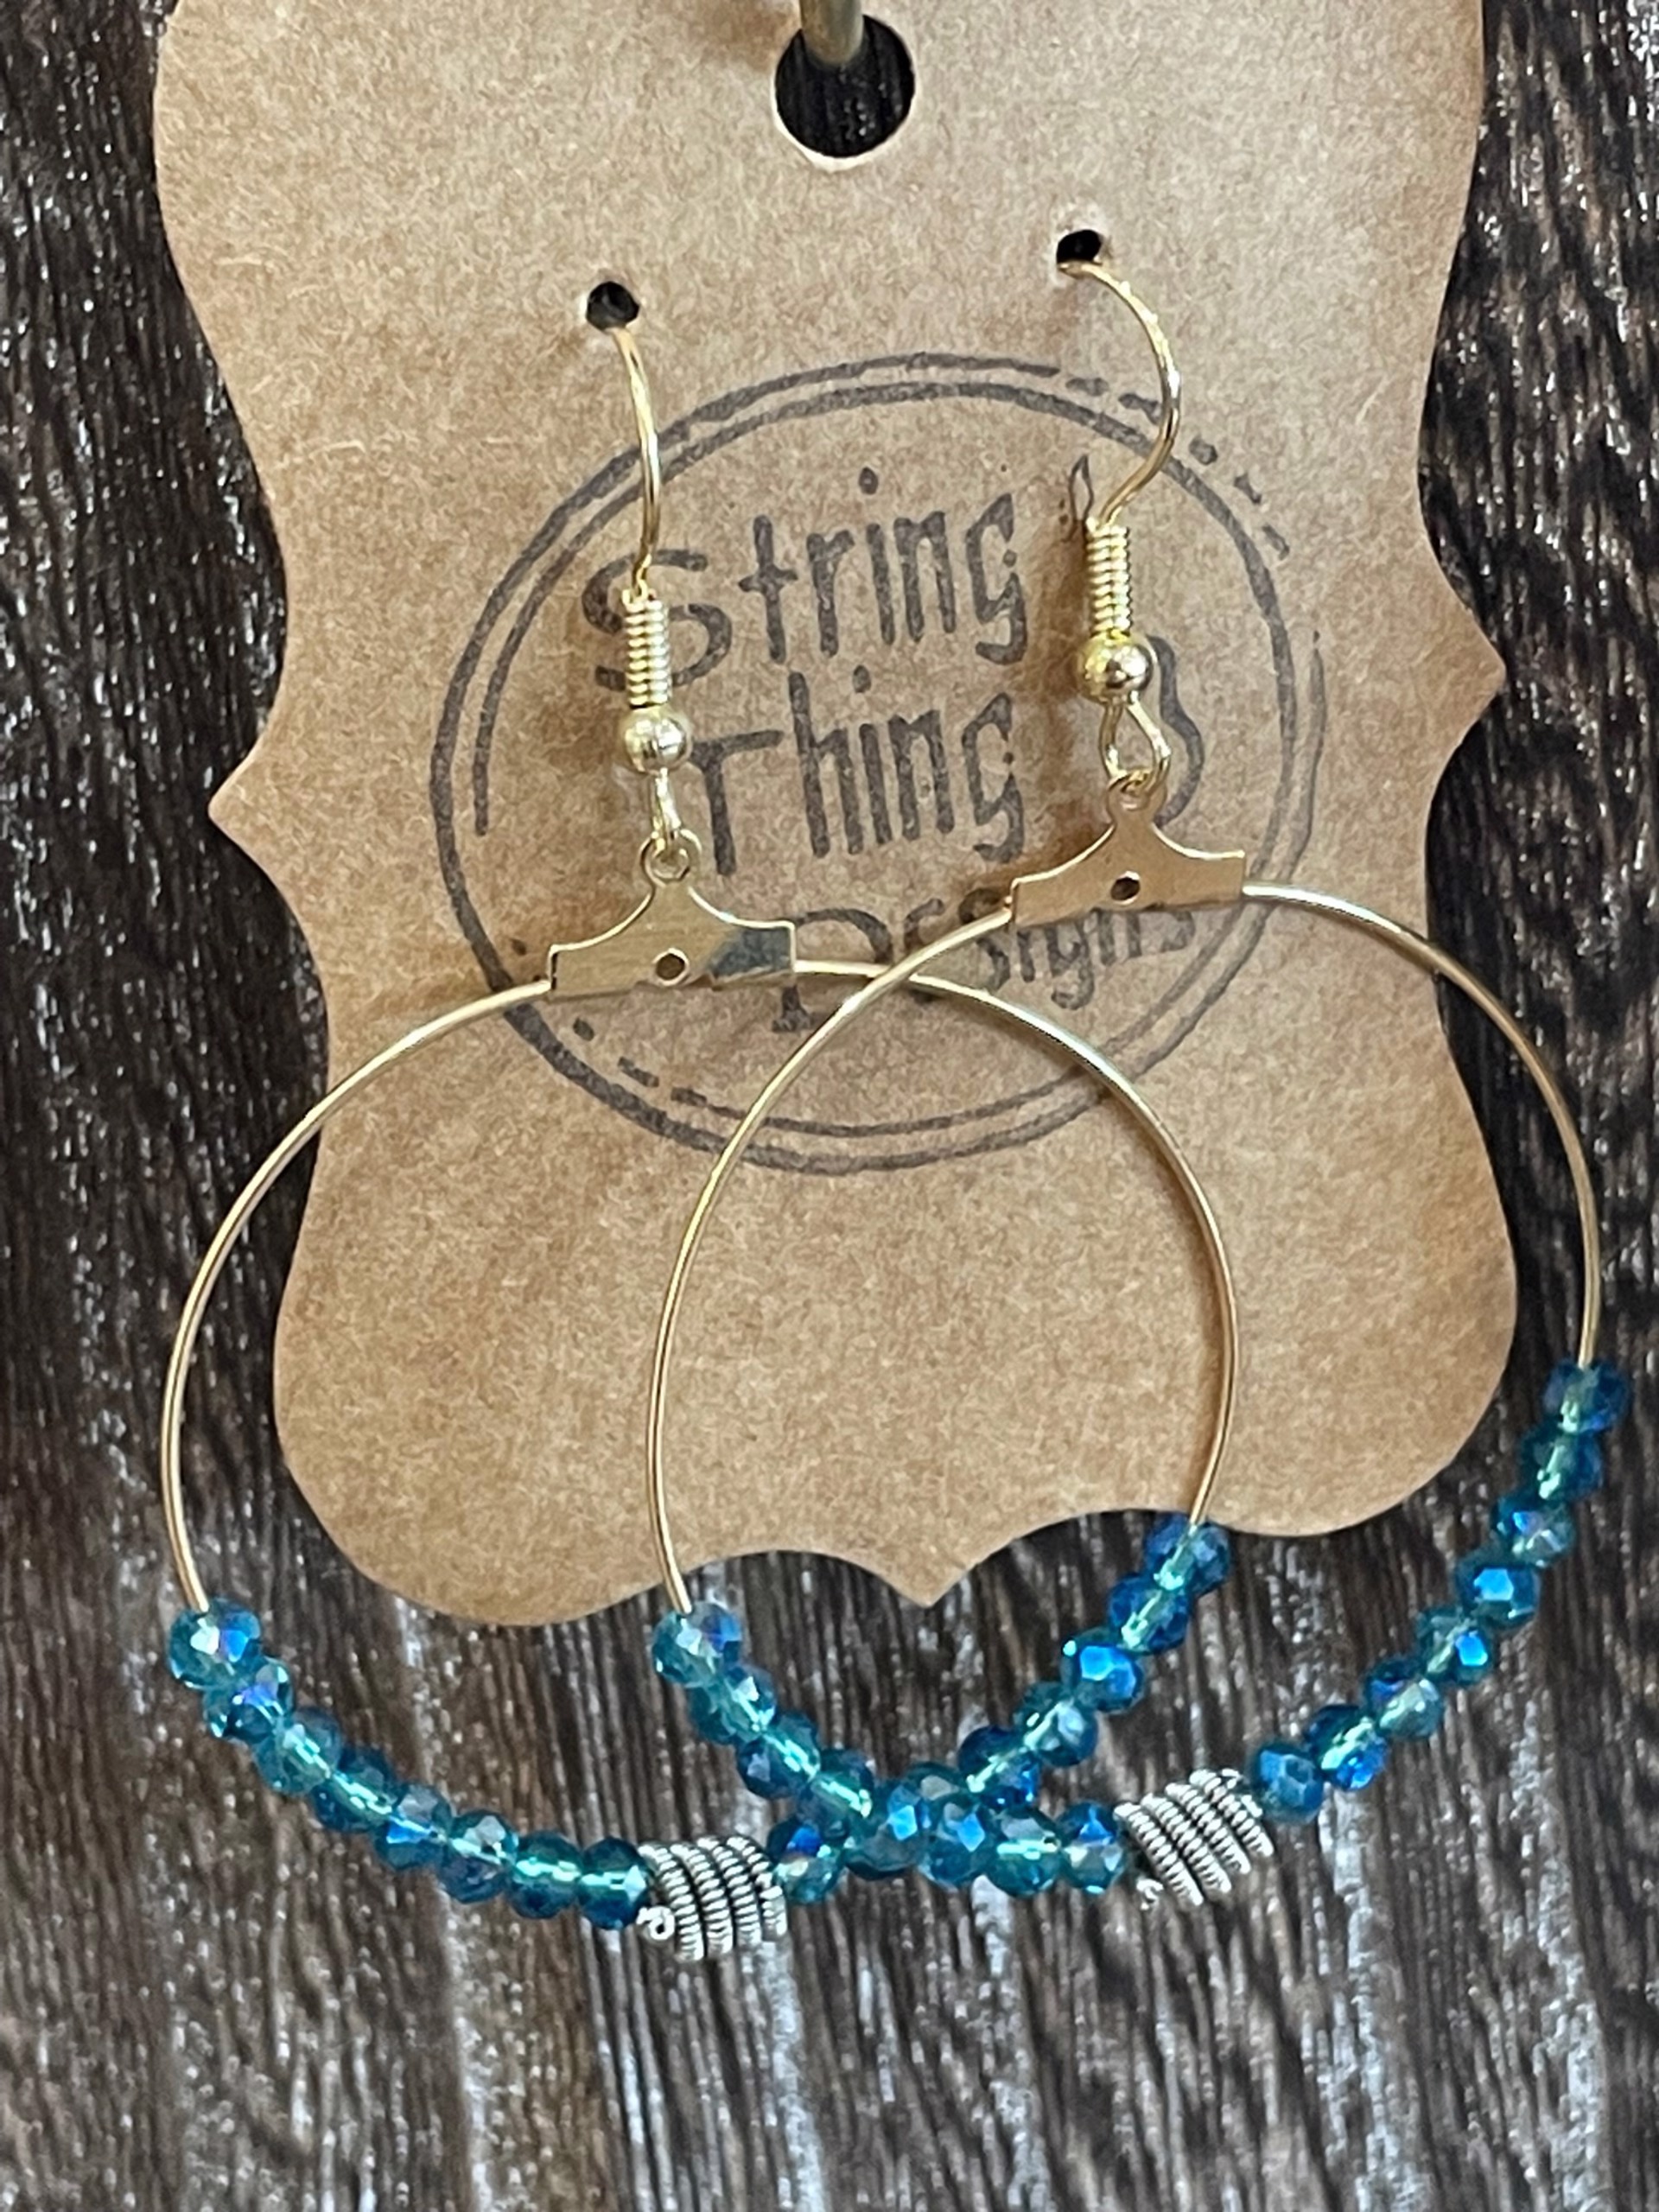 Guitar String and Blue Crystal Hoop Earrings by String Thing Designs